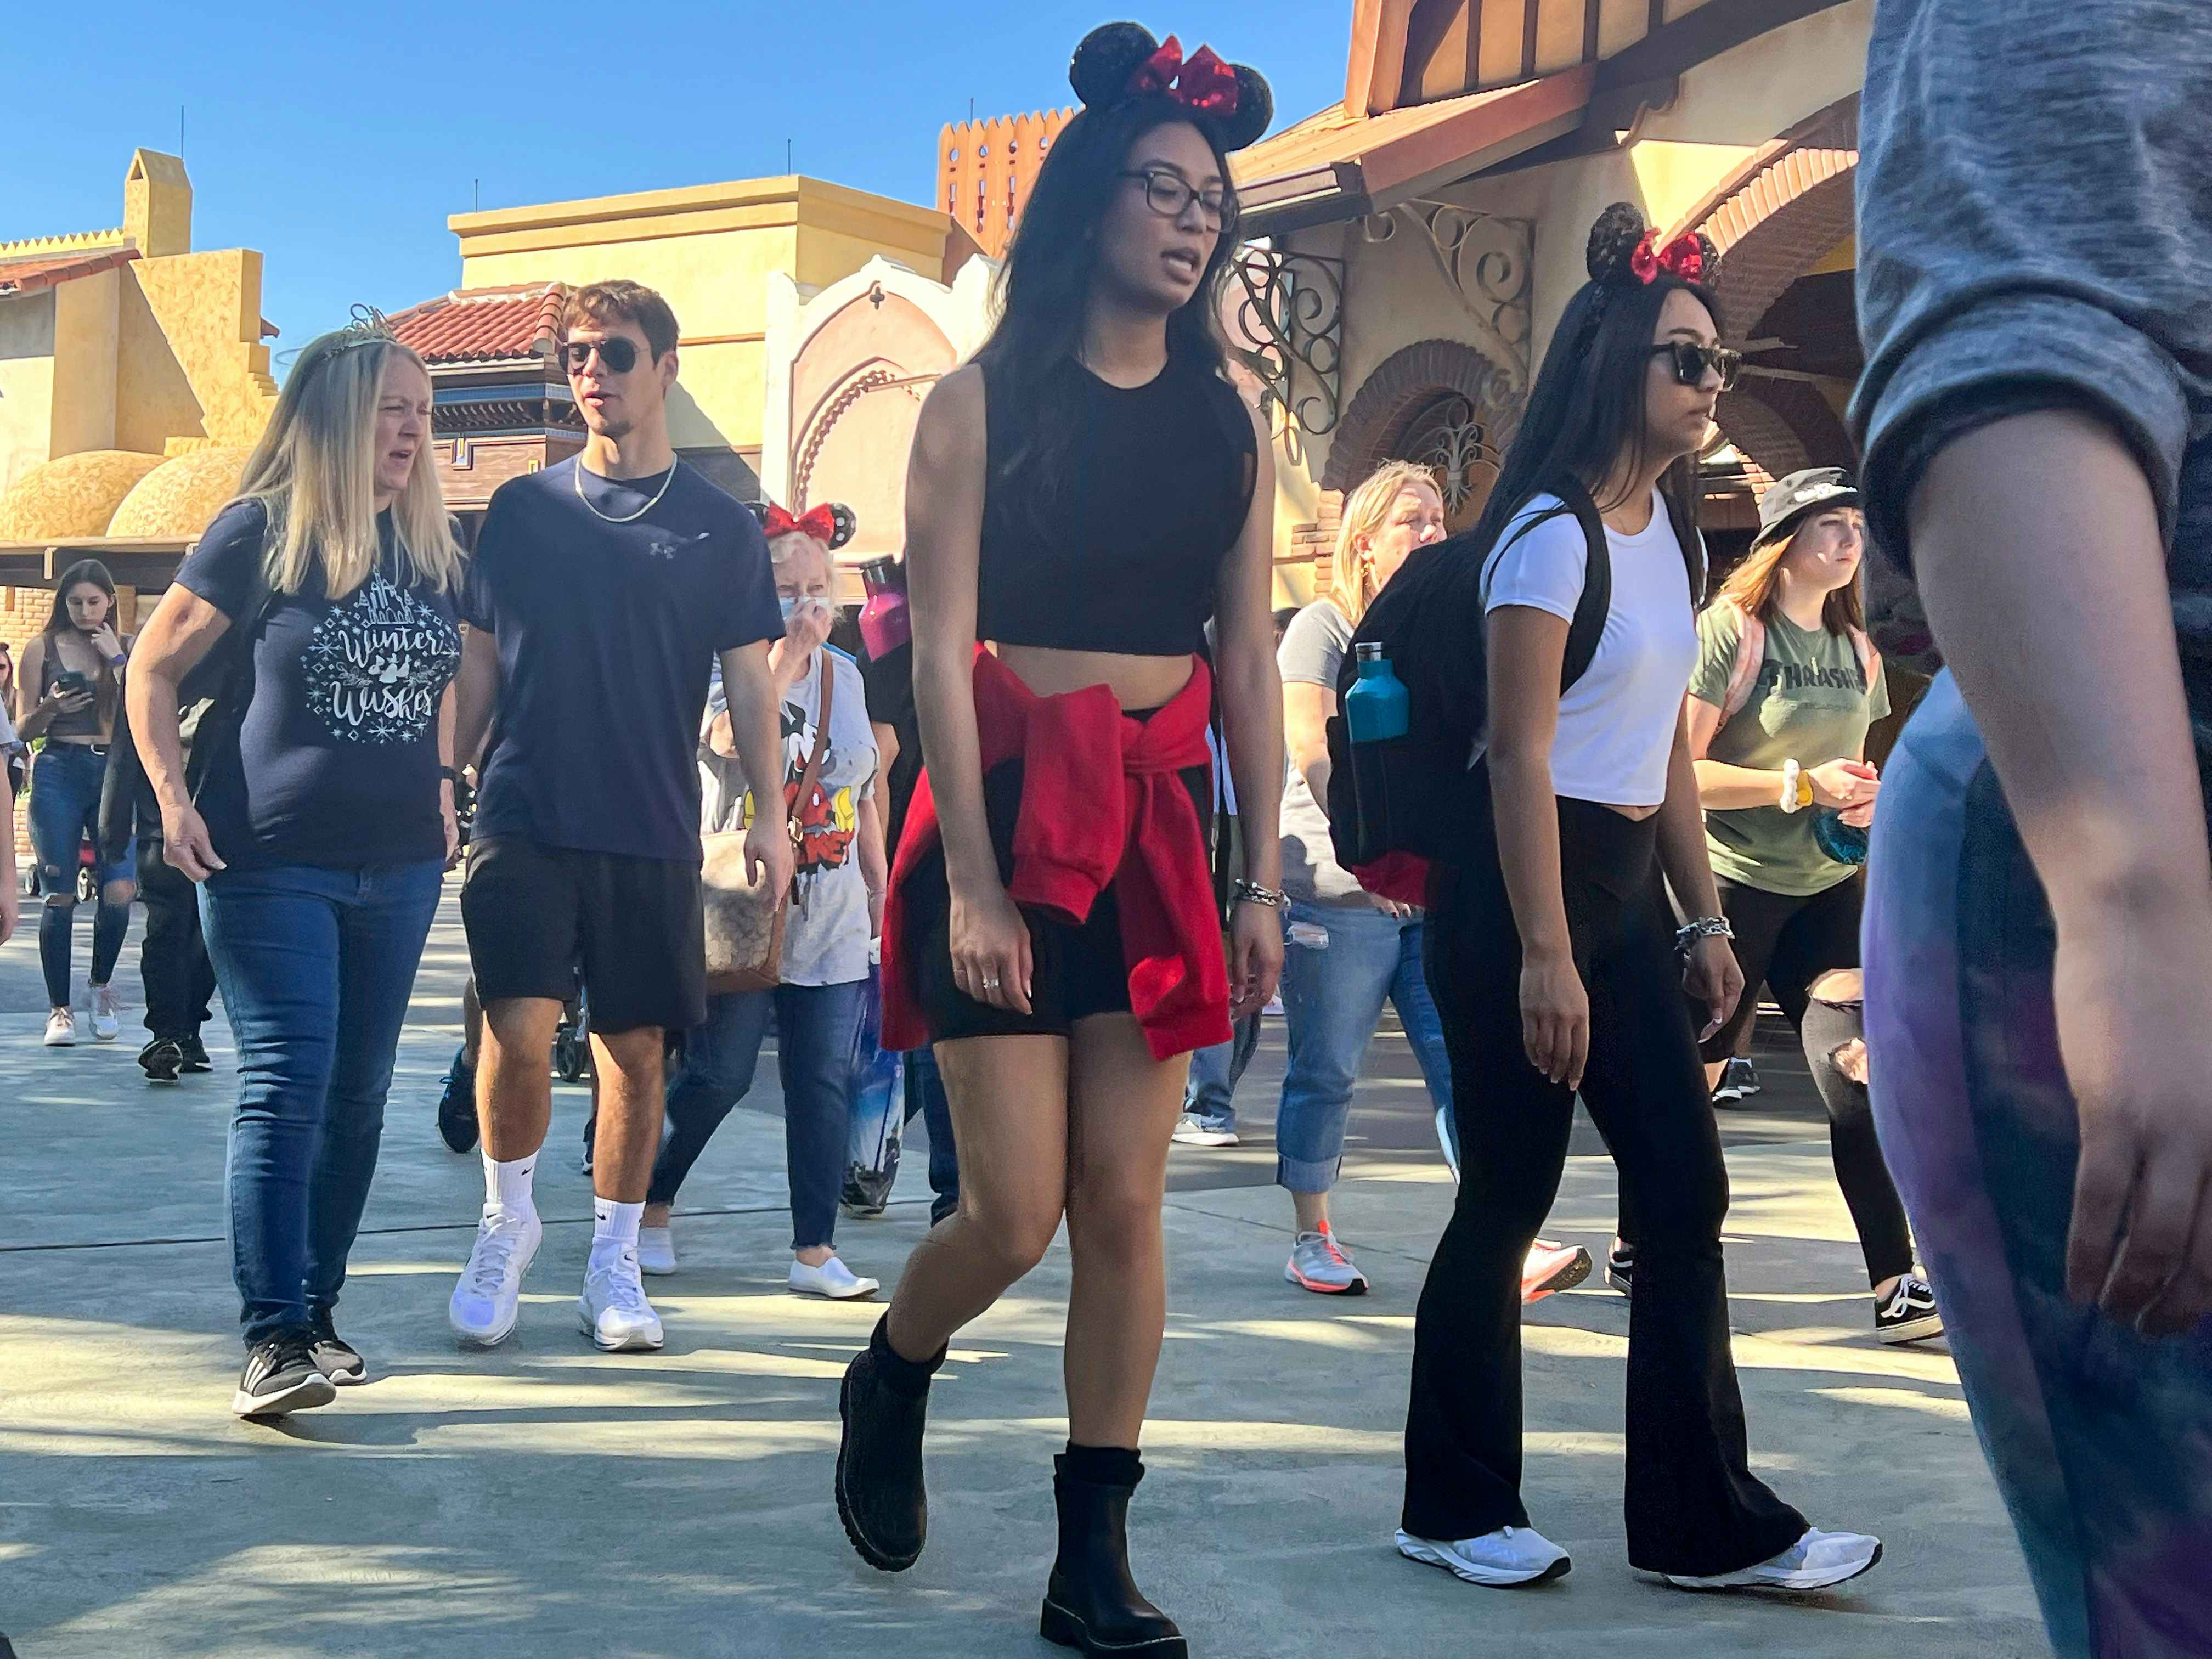 Patrons walking through a crowd at a Disney park.